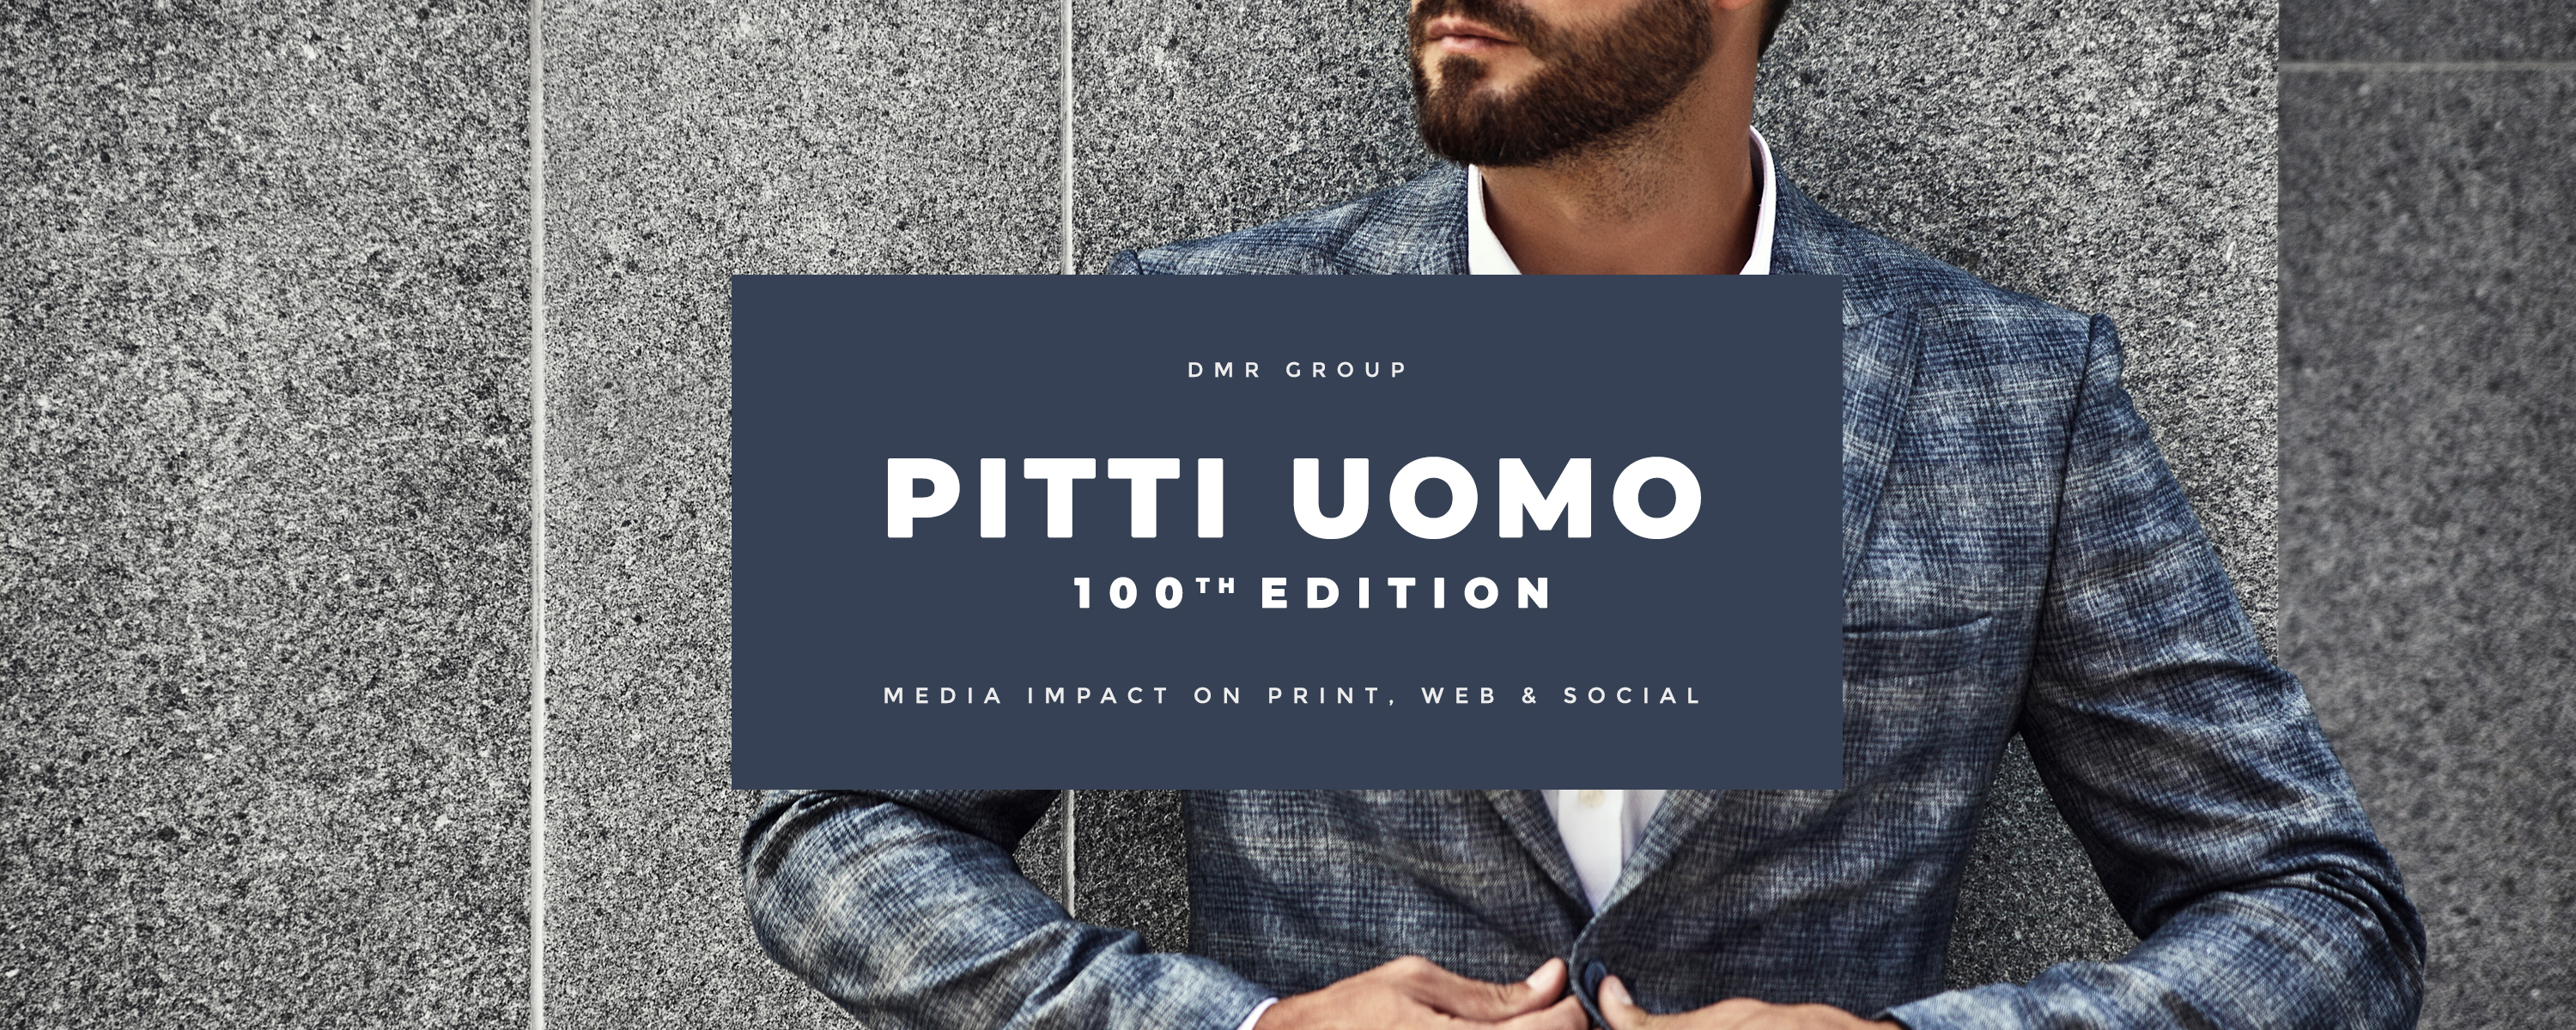 Pitti Uomo 100th Edition